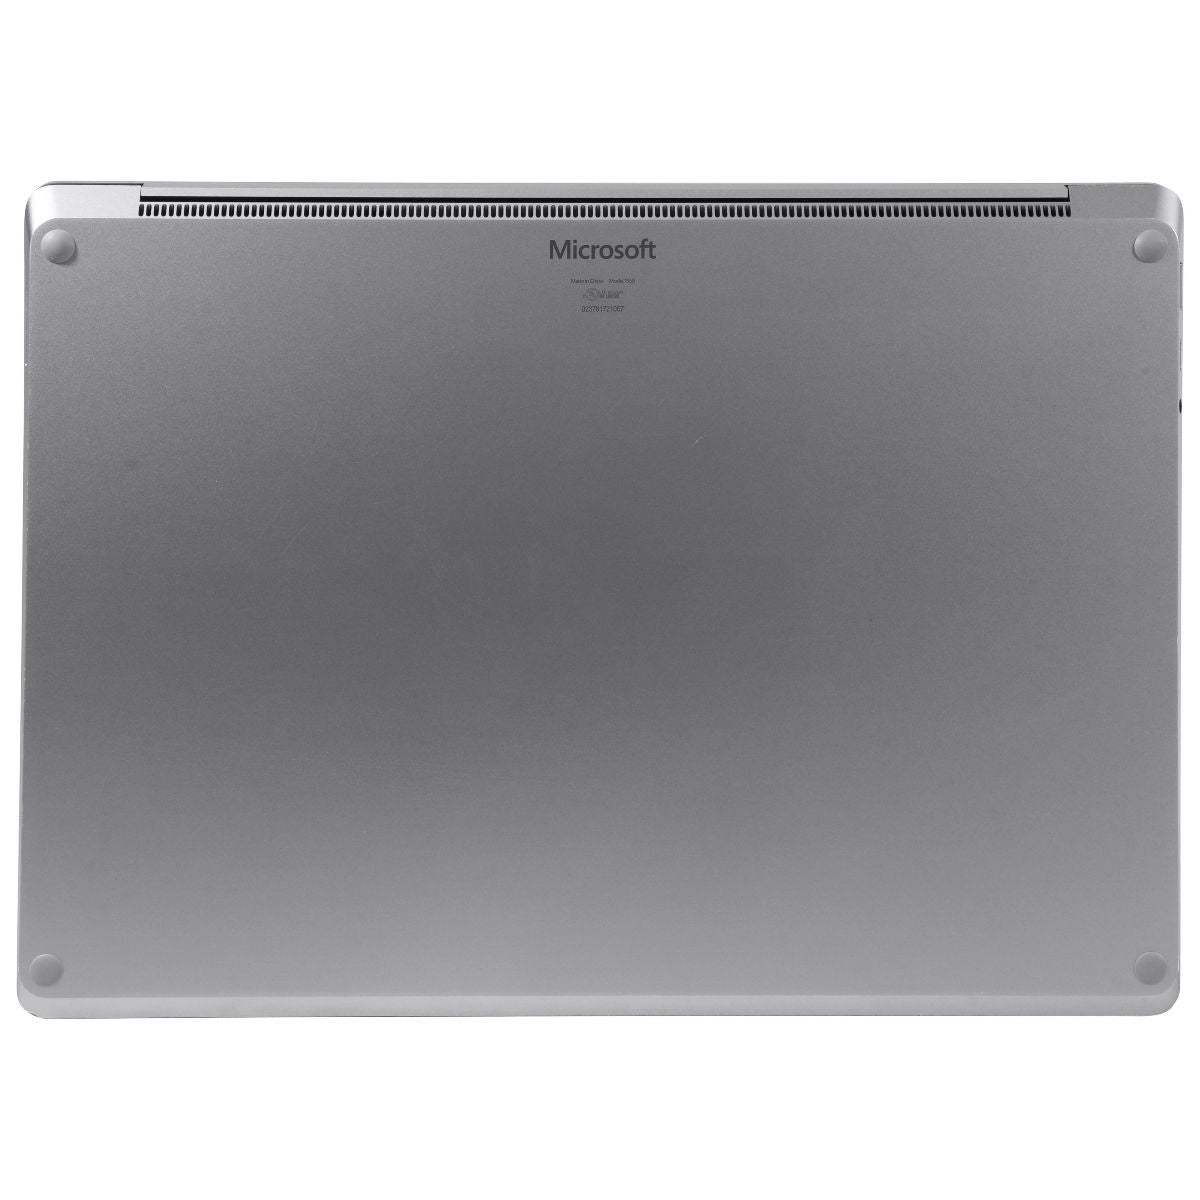 Microsoft Surface Laptop 4 (13.5-in) 1950 i5-1135G7 / 512GB SSD / 8GB - Platinum